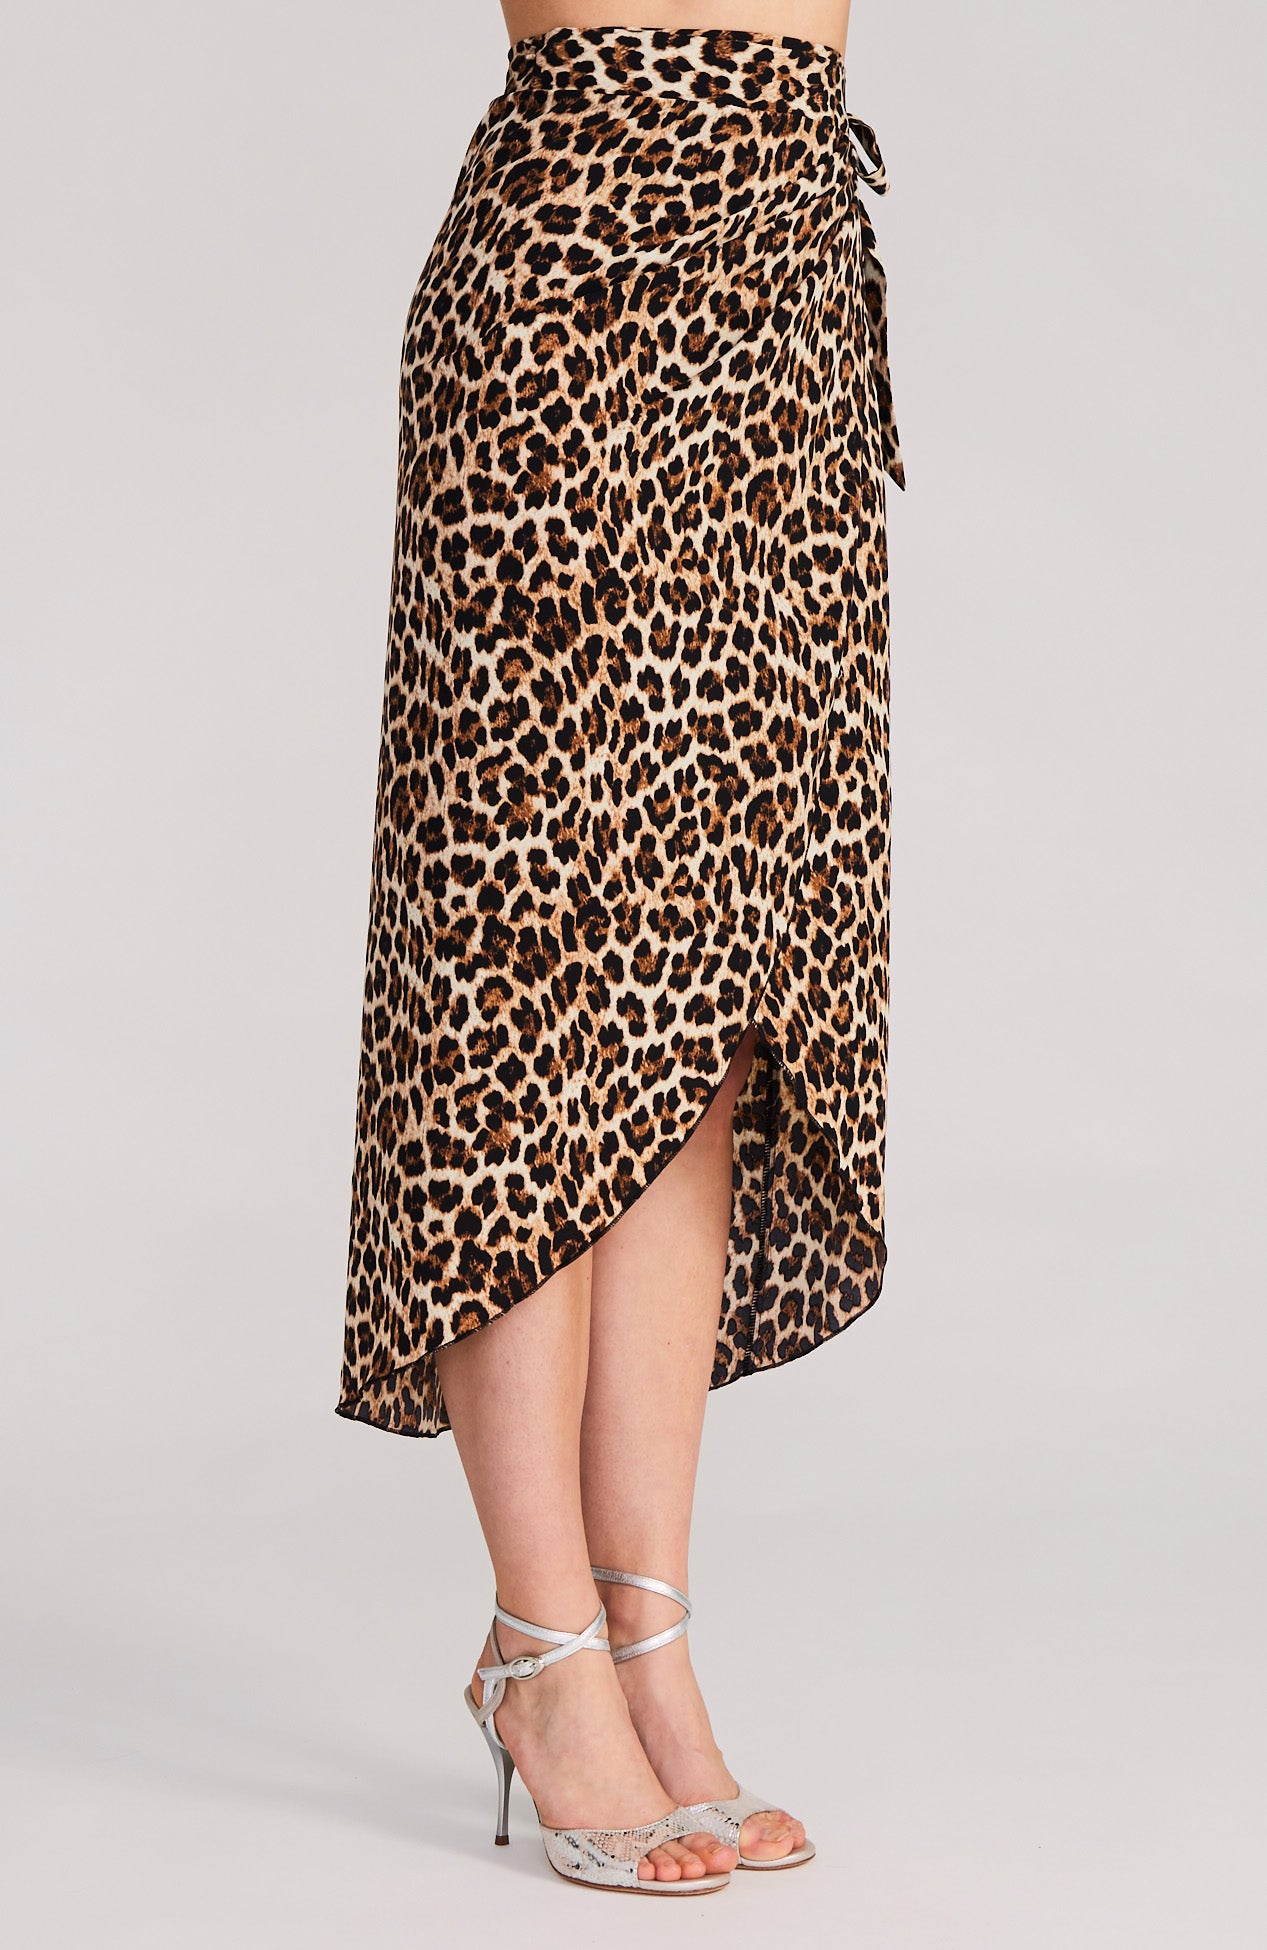 wrap skirt in leopard print